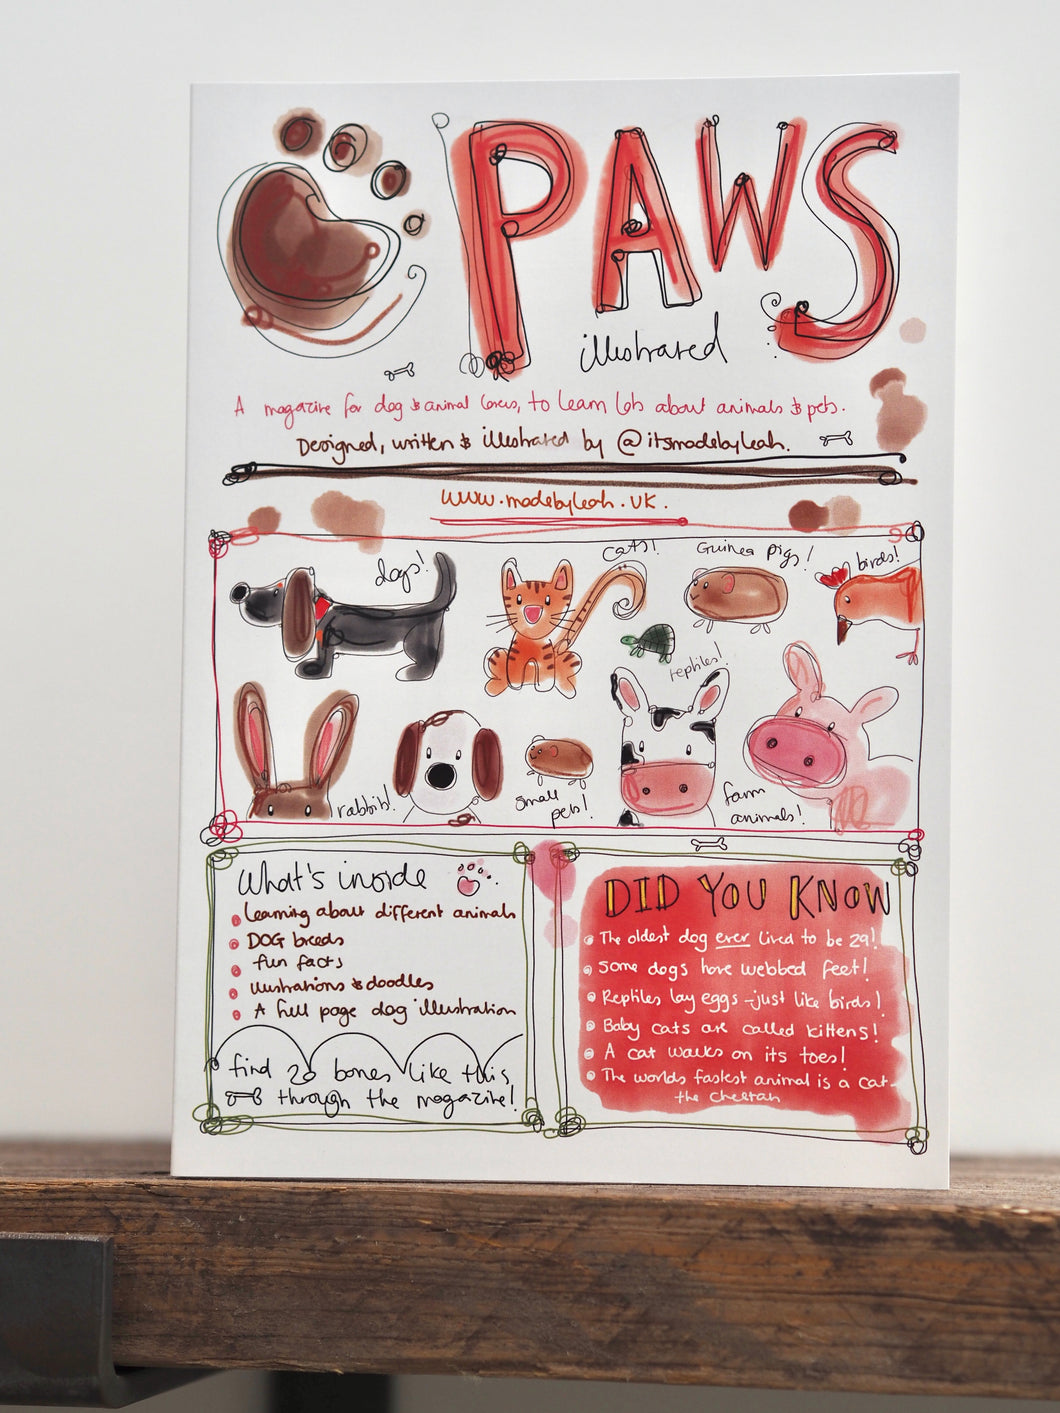 Paws Animal Magazine